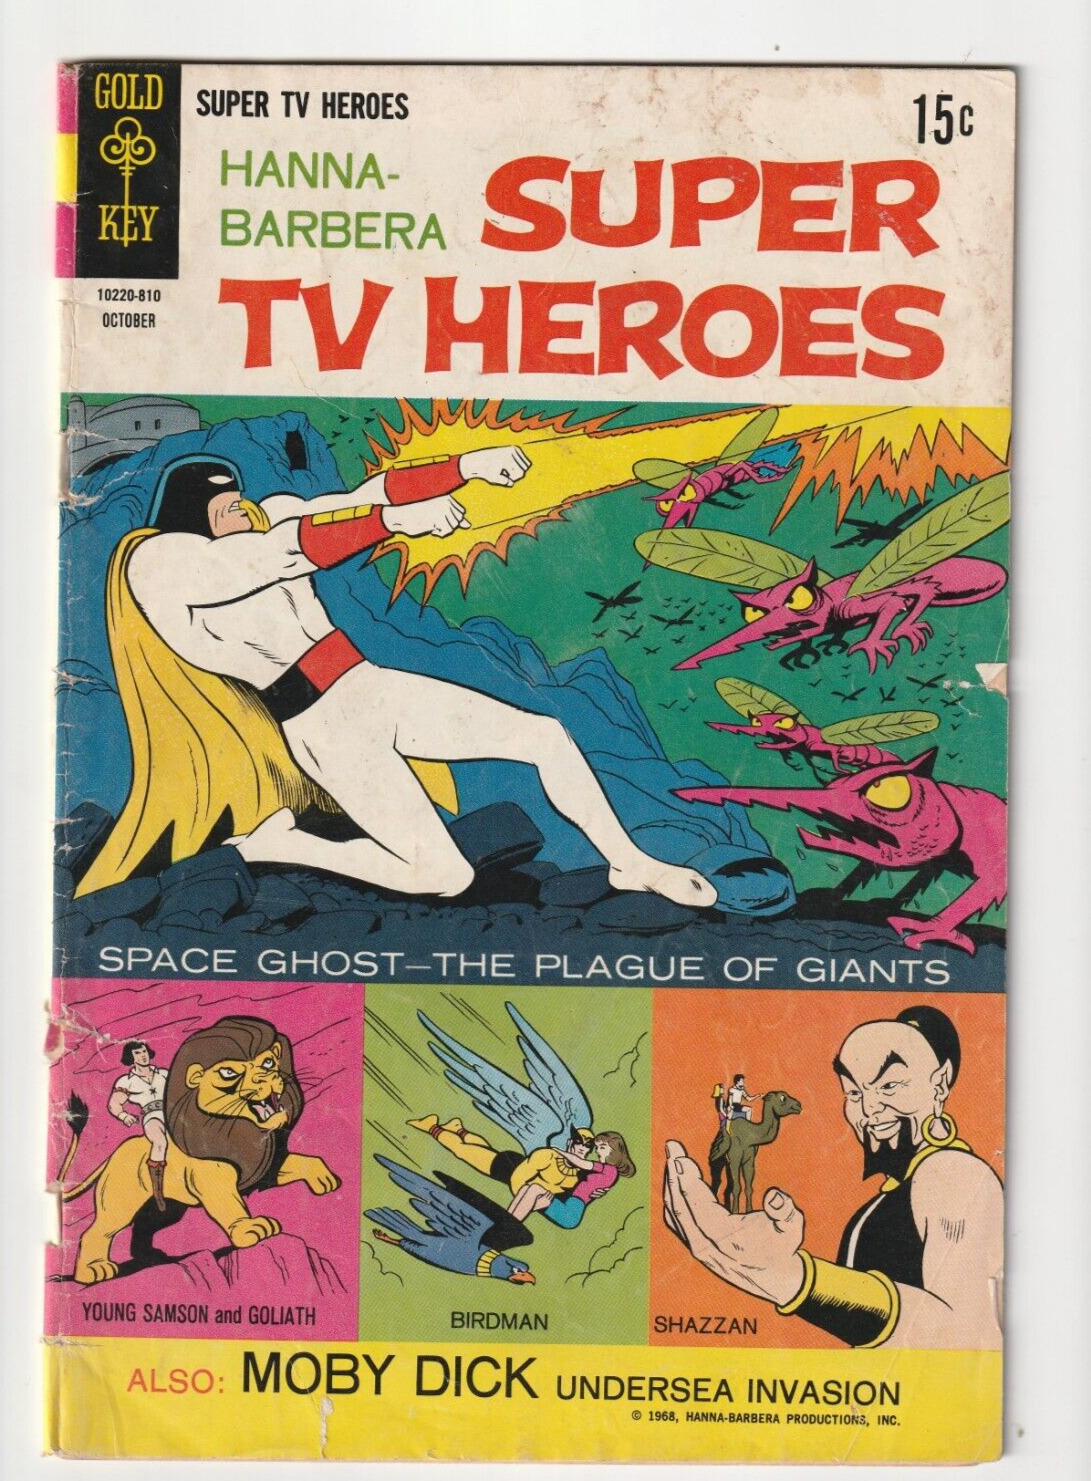 Hanna-Barbera Super TV Heroes #3 (Gold Key Comics 1968) Early Space Ghost Look